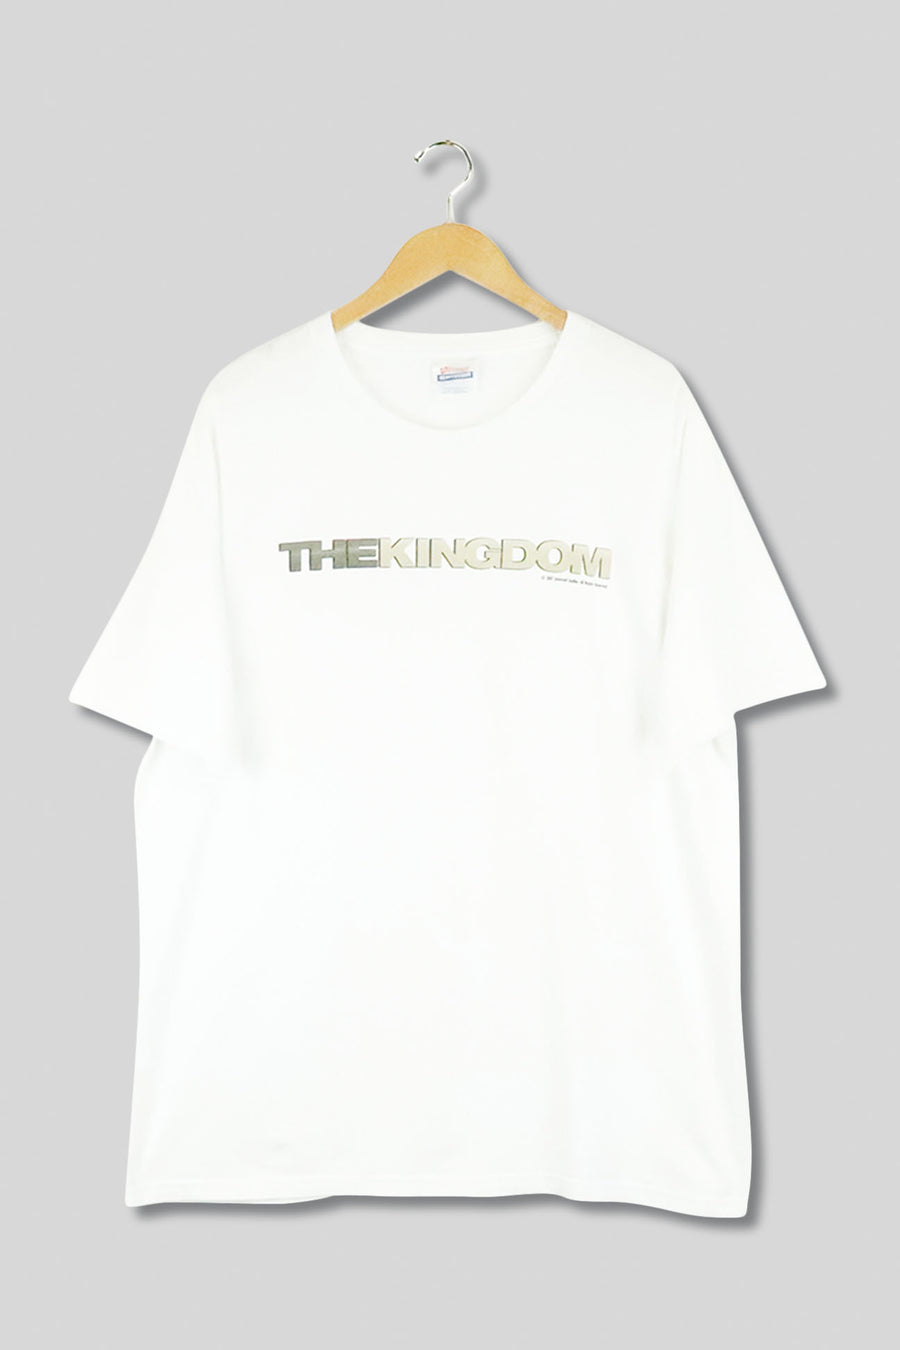 Vintage 2007 The Kingdom T Shirt Sz XL